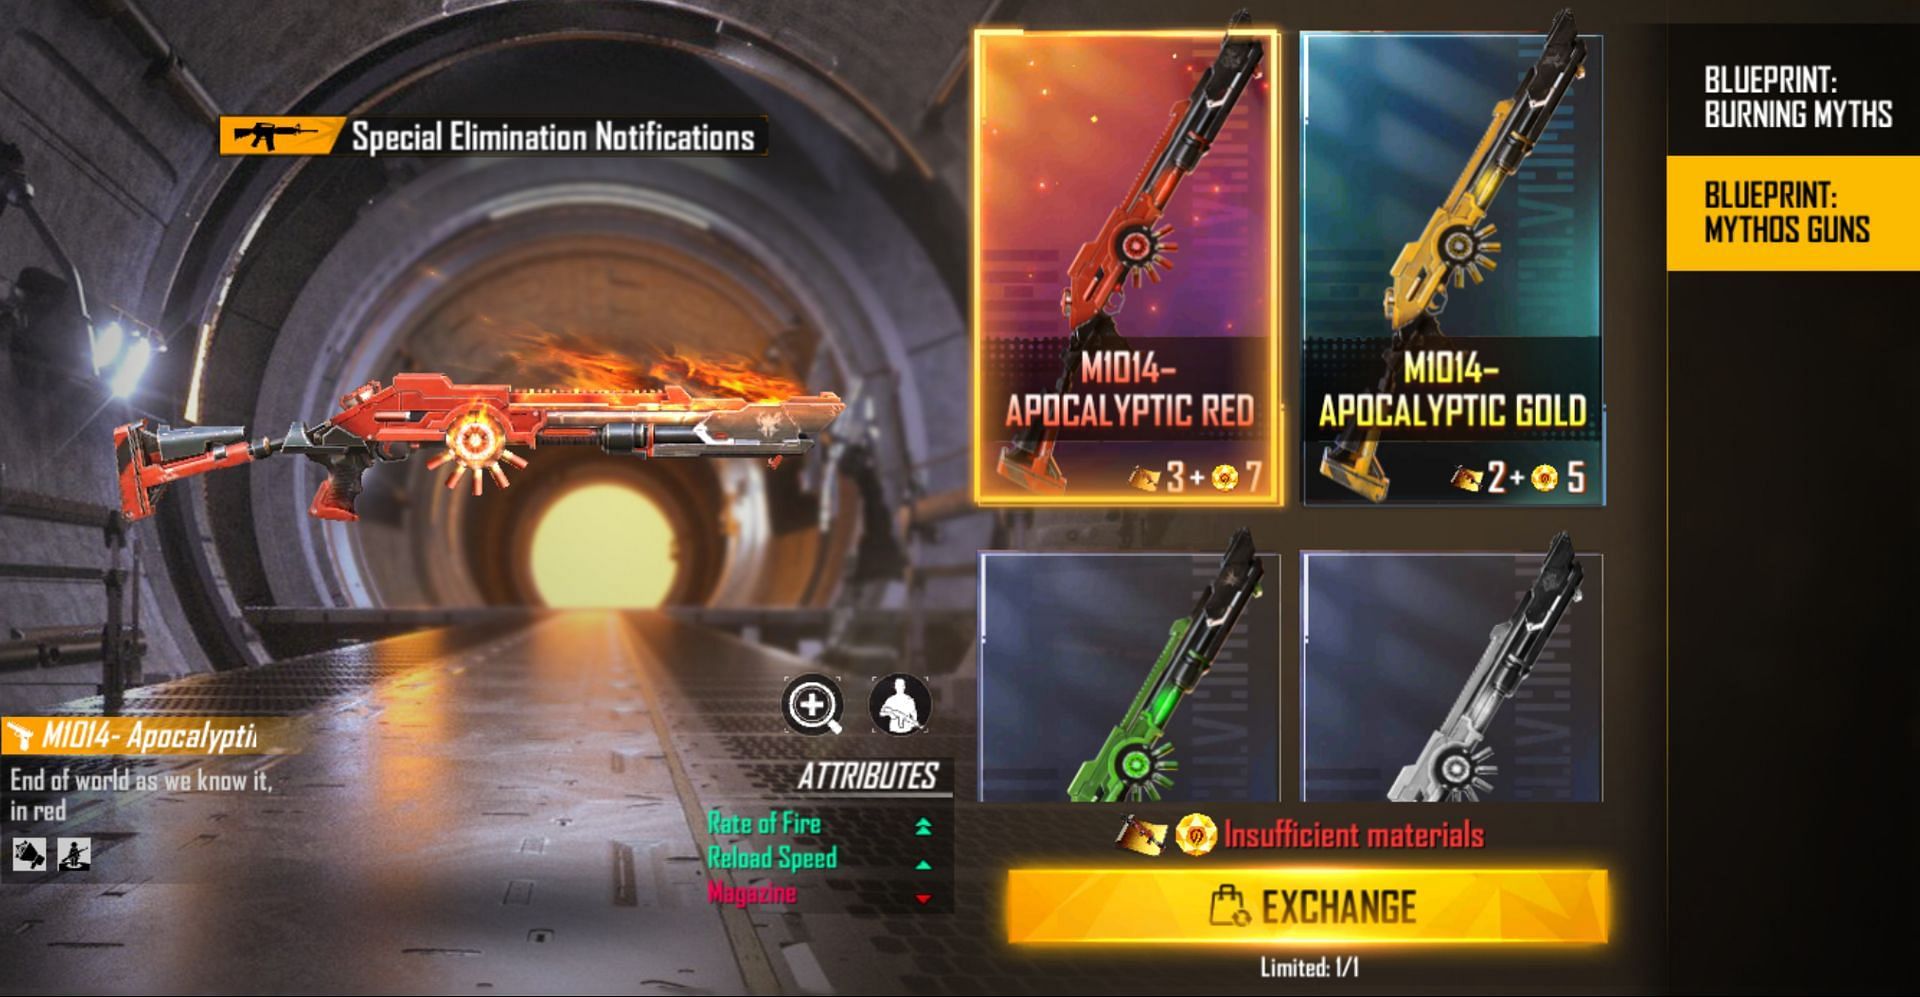 Earlier this week, users had the option to get multiple legendary gun skins (Image via Garena)